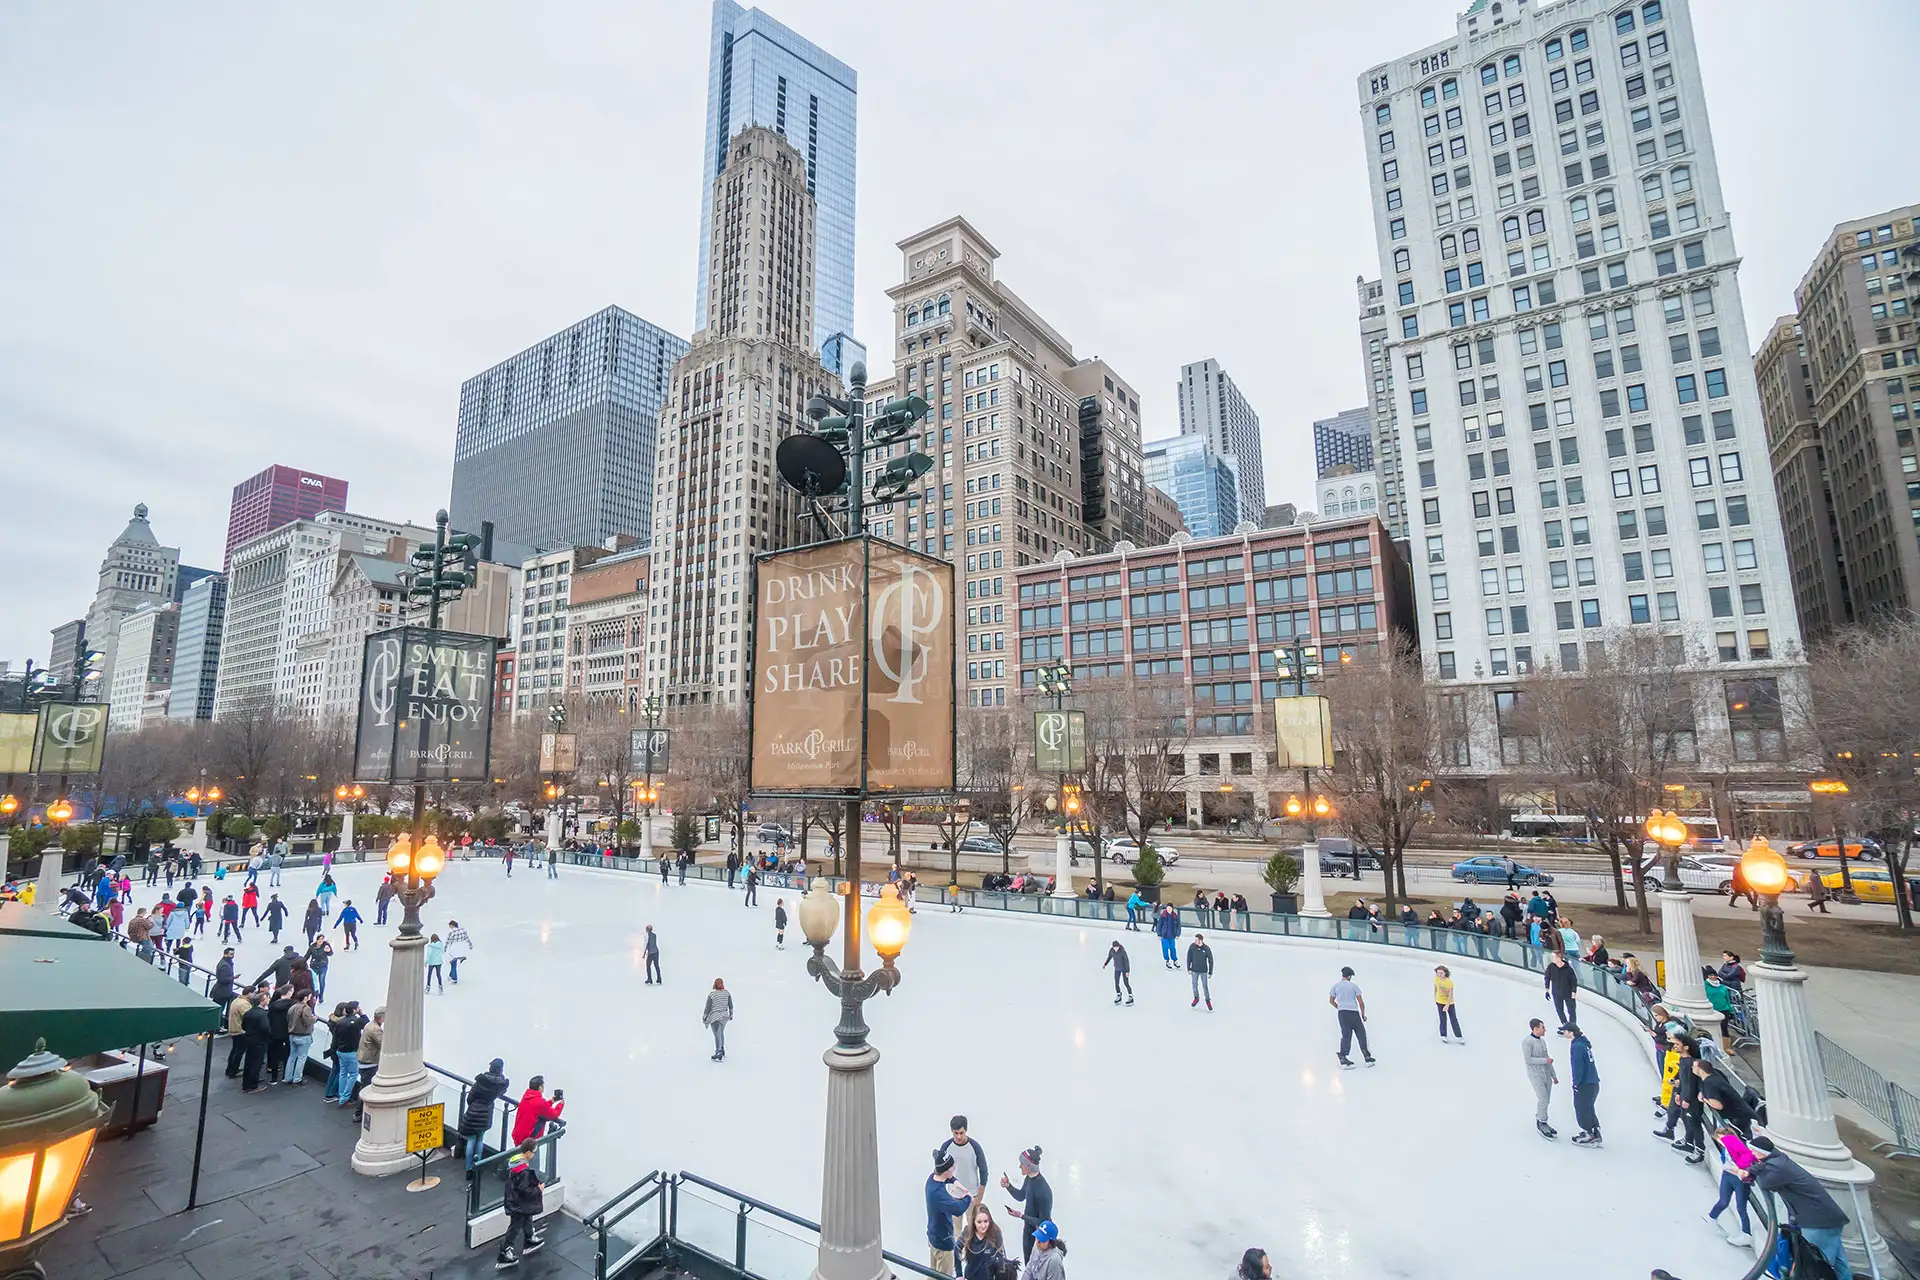 Ice skating at McCormick Tribune Plaza in Chicago, Illinois; Courtesy of Miune/Shutterstock.com